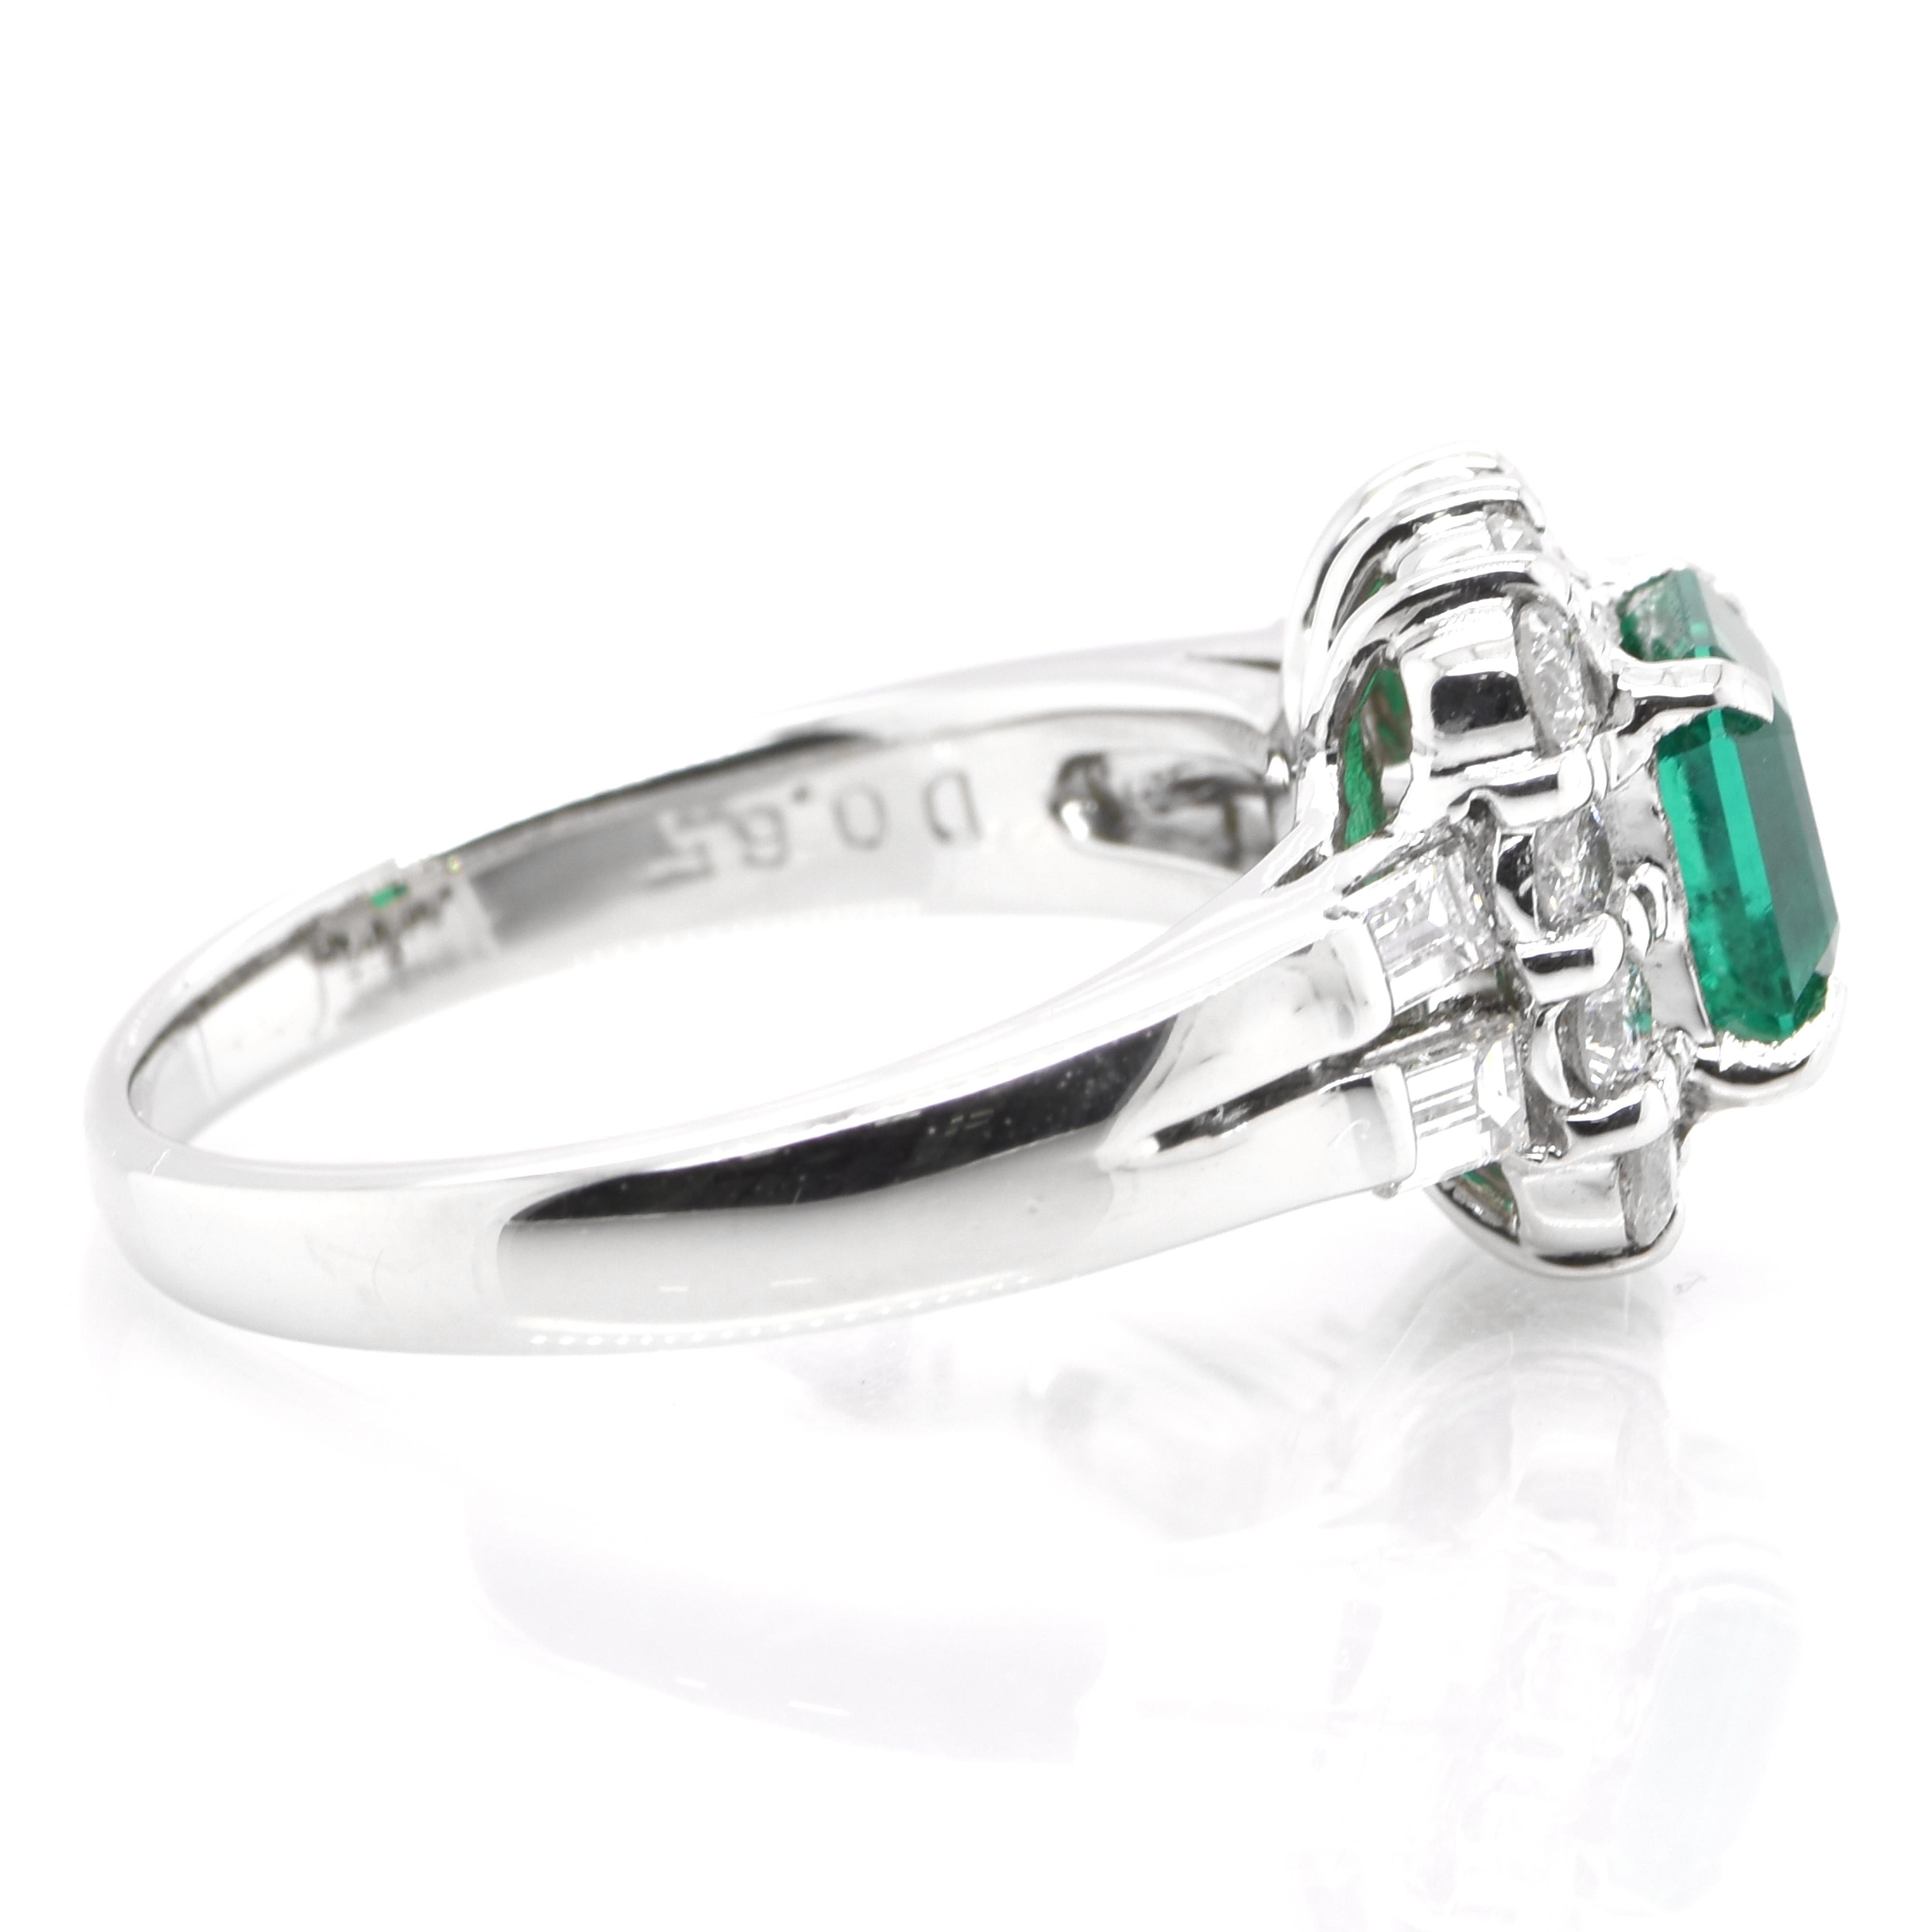 Women's 0.92 Carat Natural Vivid Green Emerald and Diamond Ring Set in Platinum